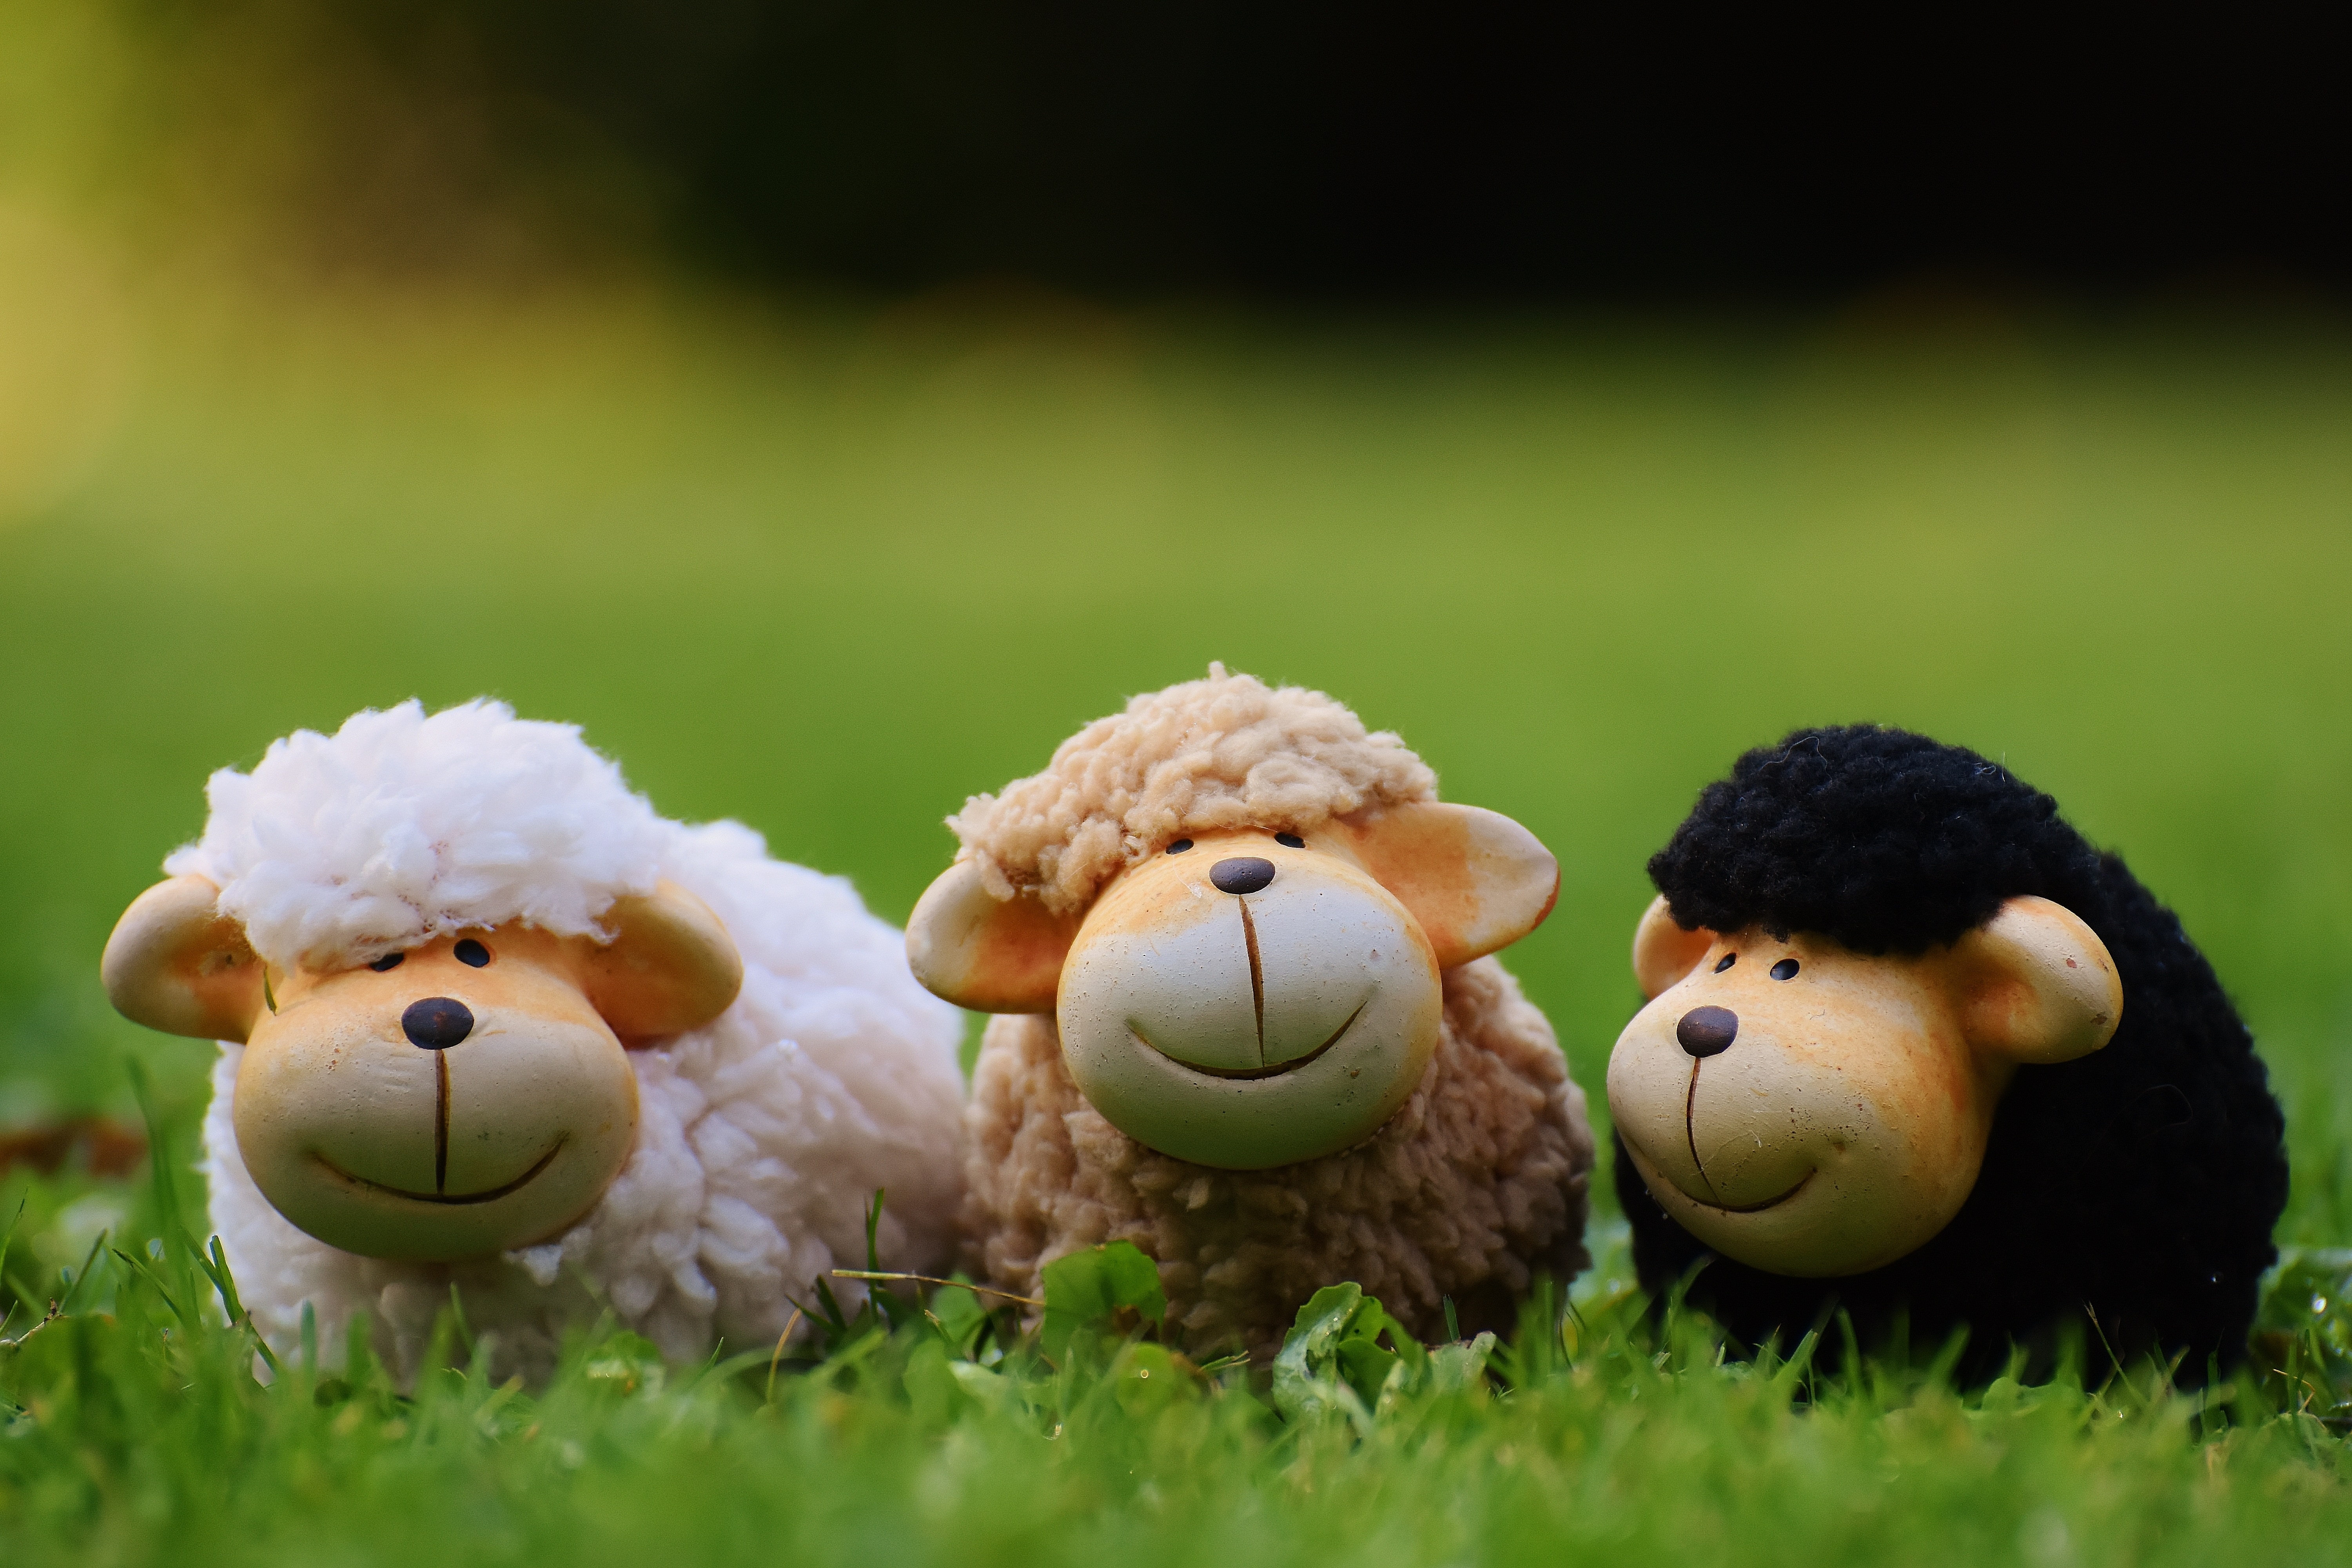 3 sheeps plush toy